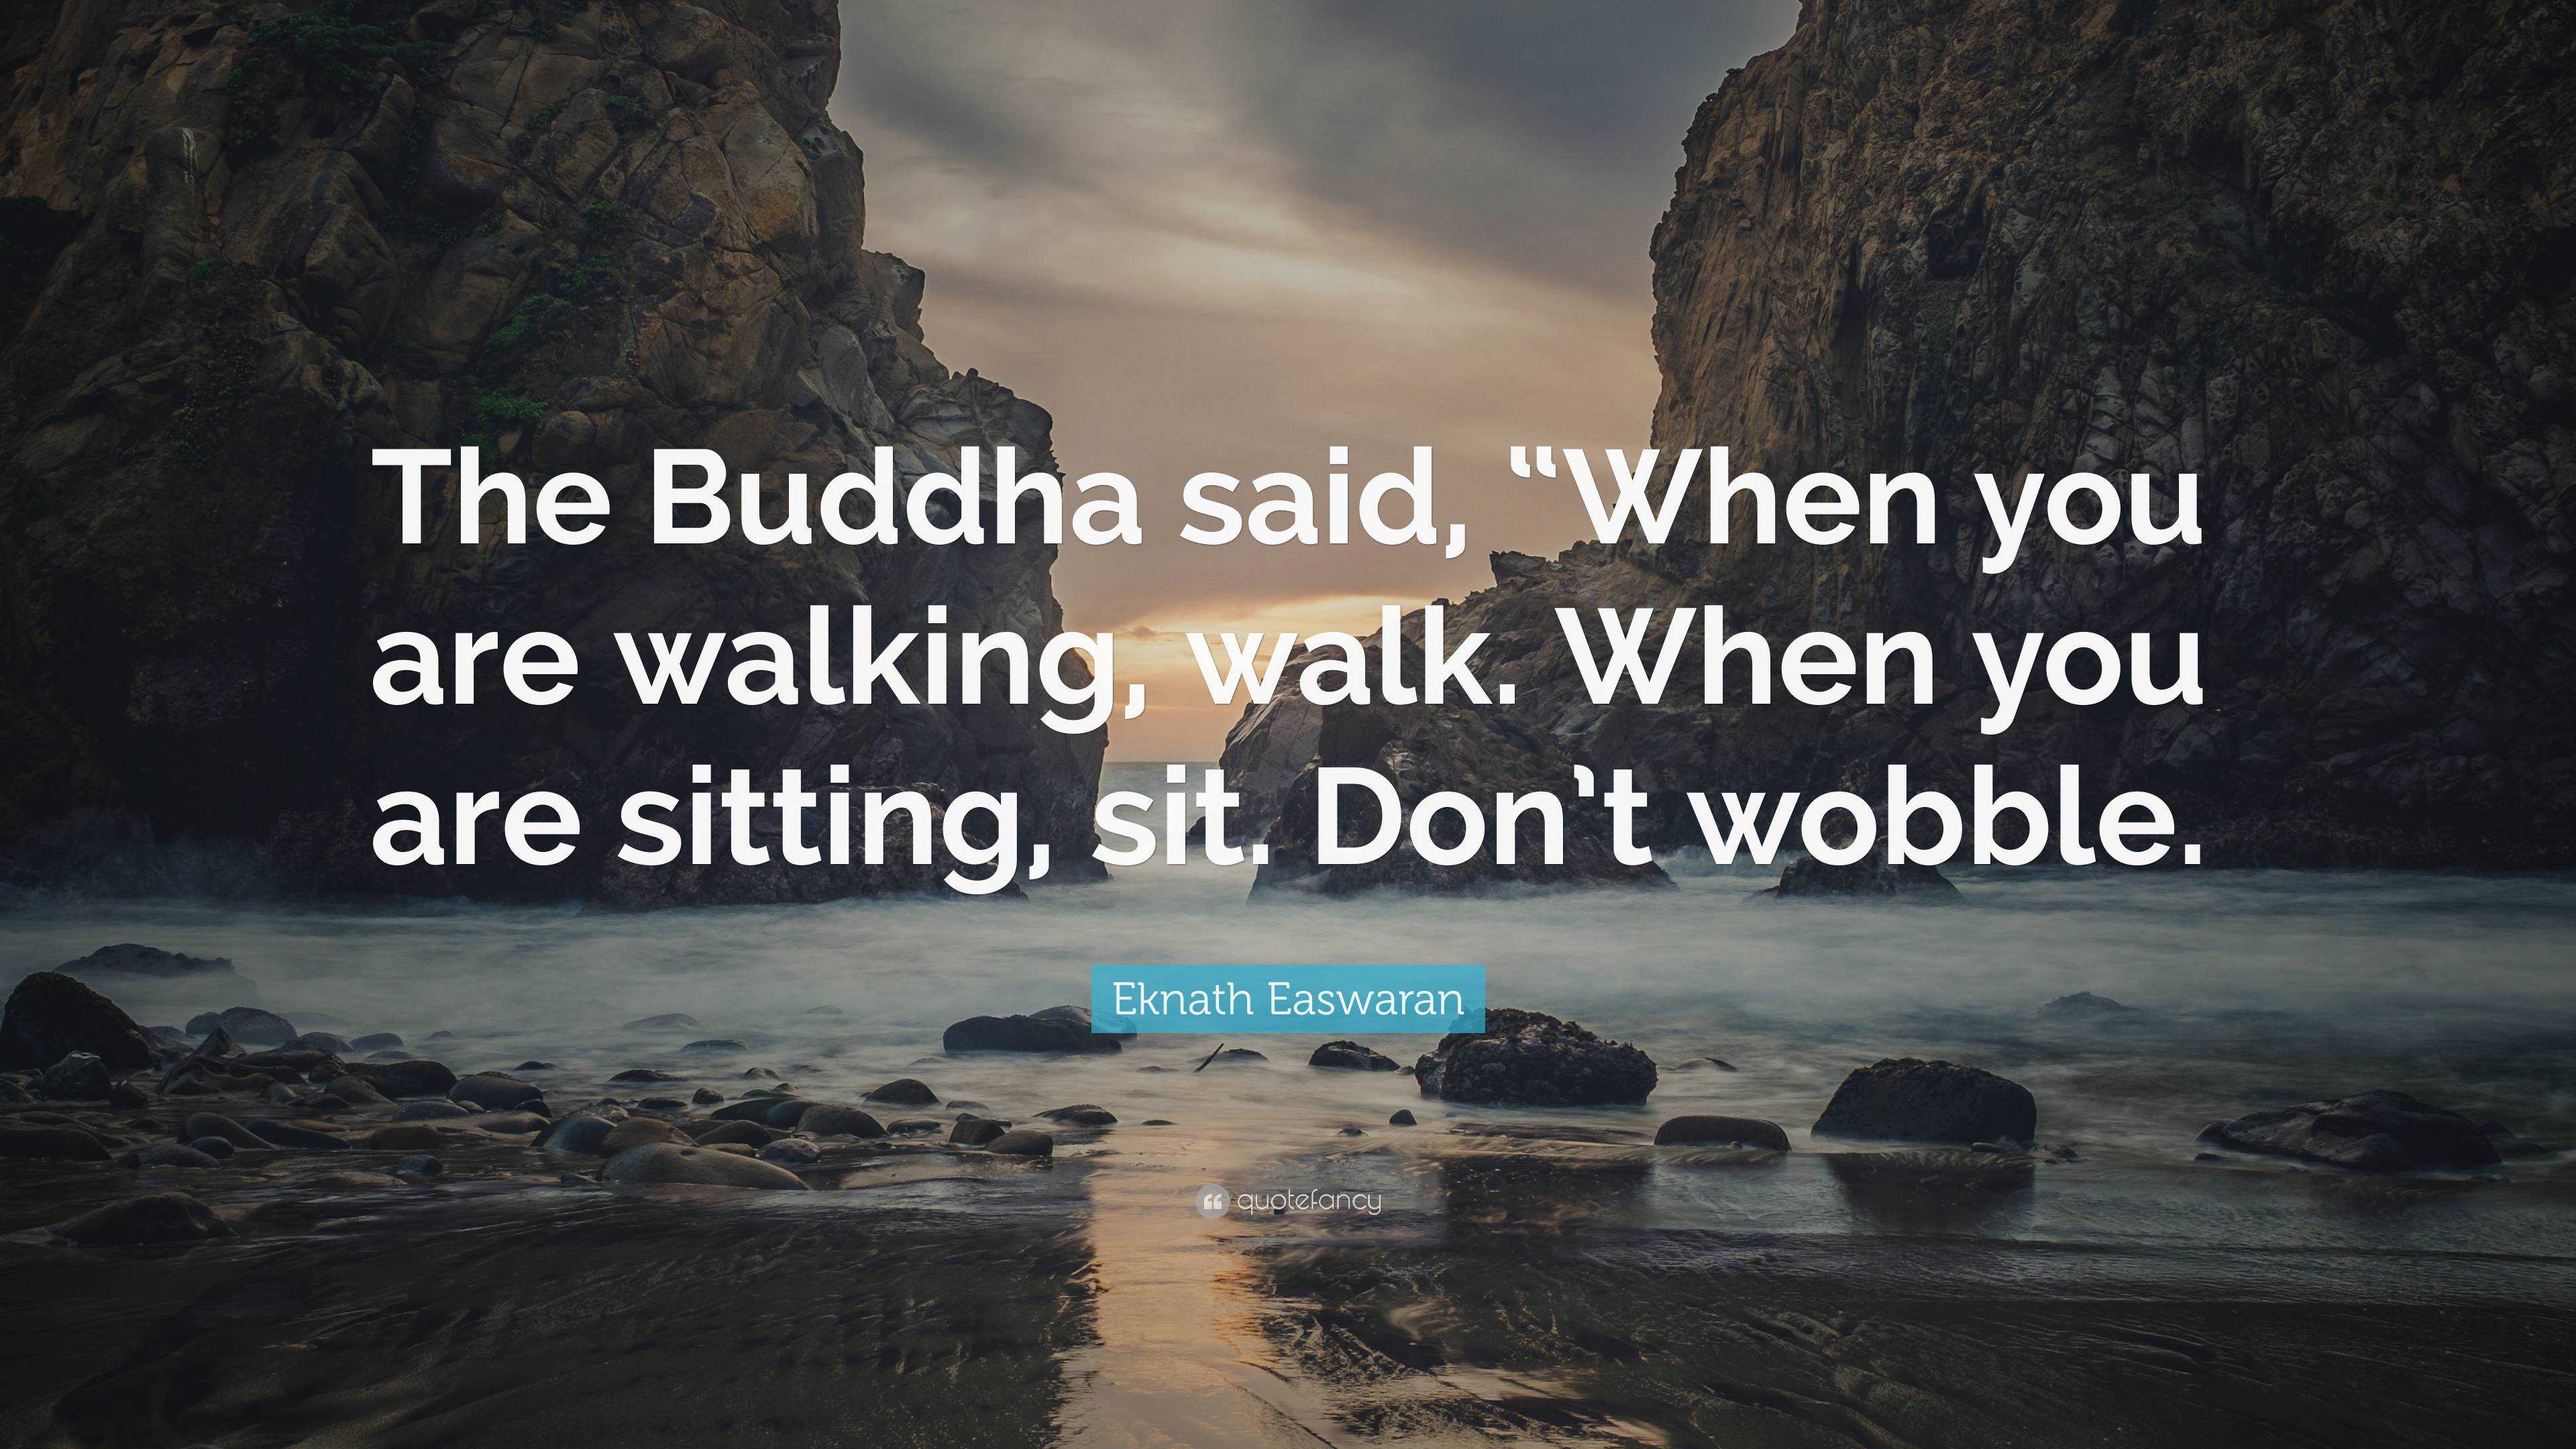 Eknath Easwaran Quote: “The Buddha said, “When you are walking, walk ...